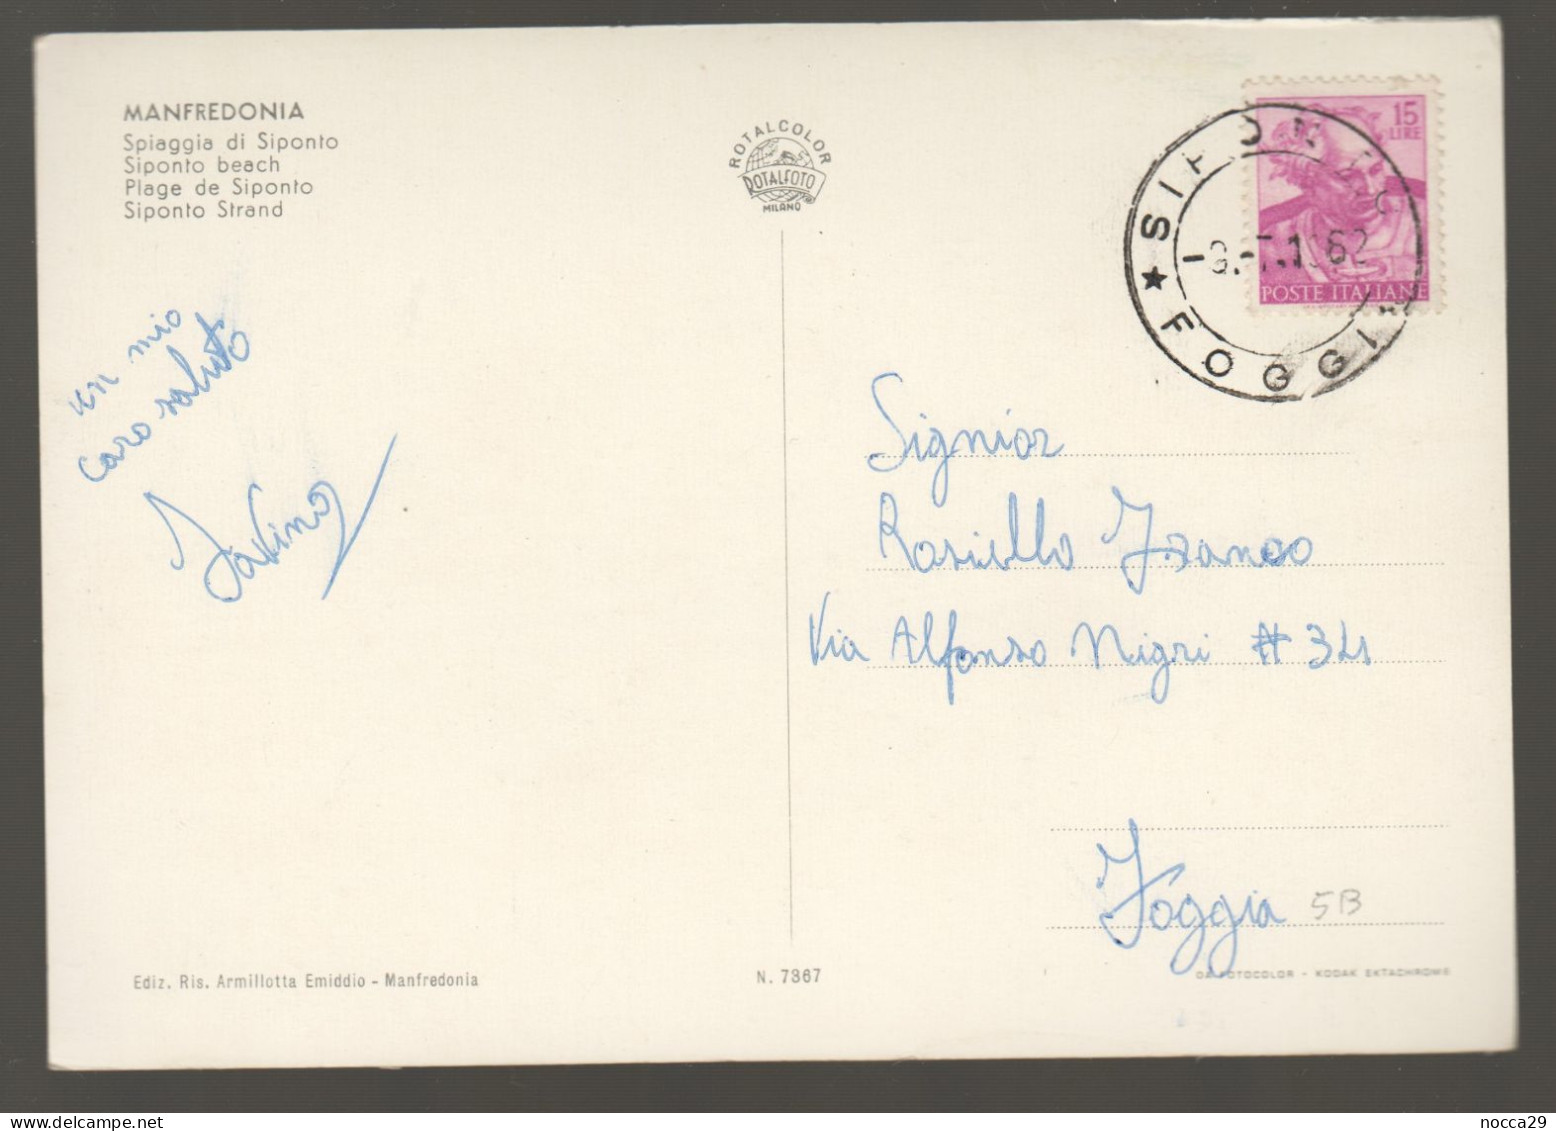 MANFREDONIA - 1962 - SPIAGGIA DI SIPONTO - ANIMATISSIMA - Manfredonia